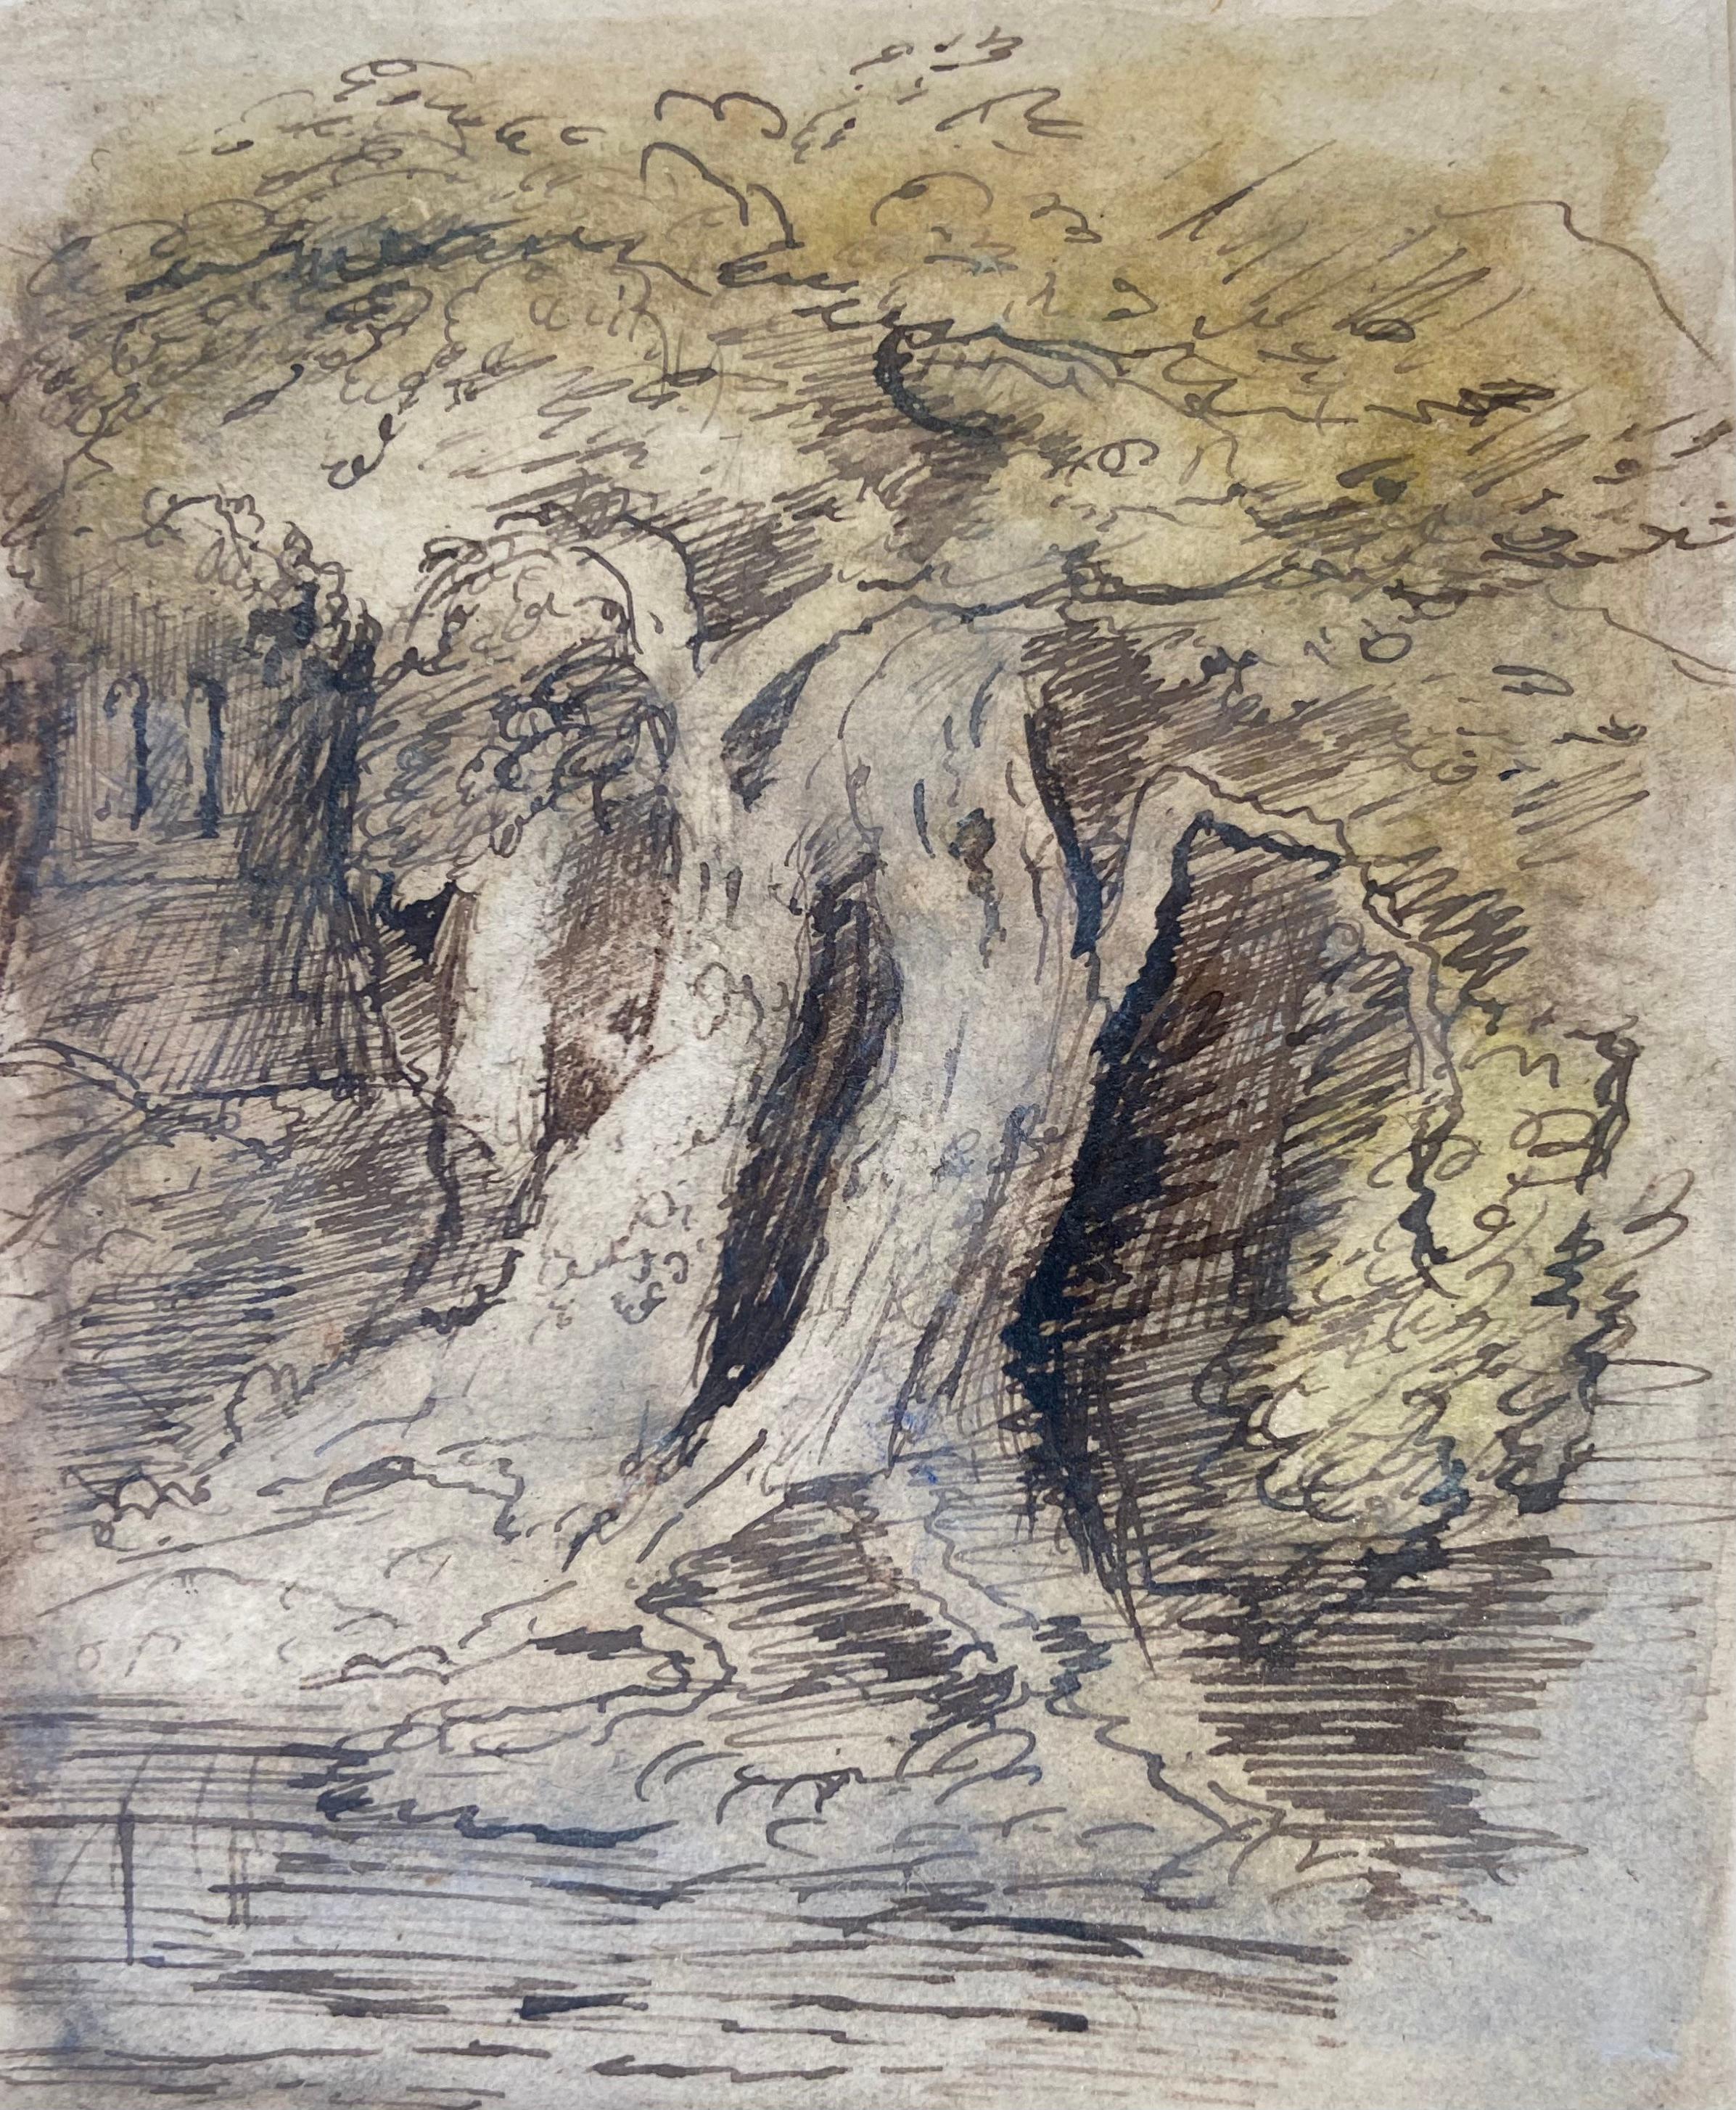 Samuel Palmer (b.1805) Landscape Art - Ancient Oak Trees in Lullingstone Park, Samuel Palmer Watercolour and Ink 